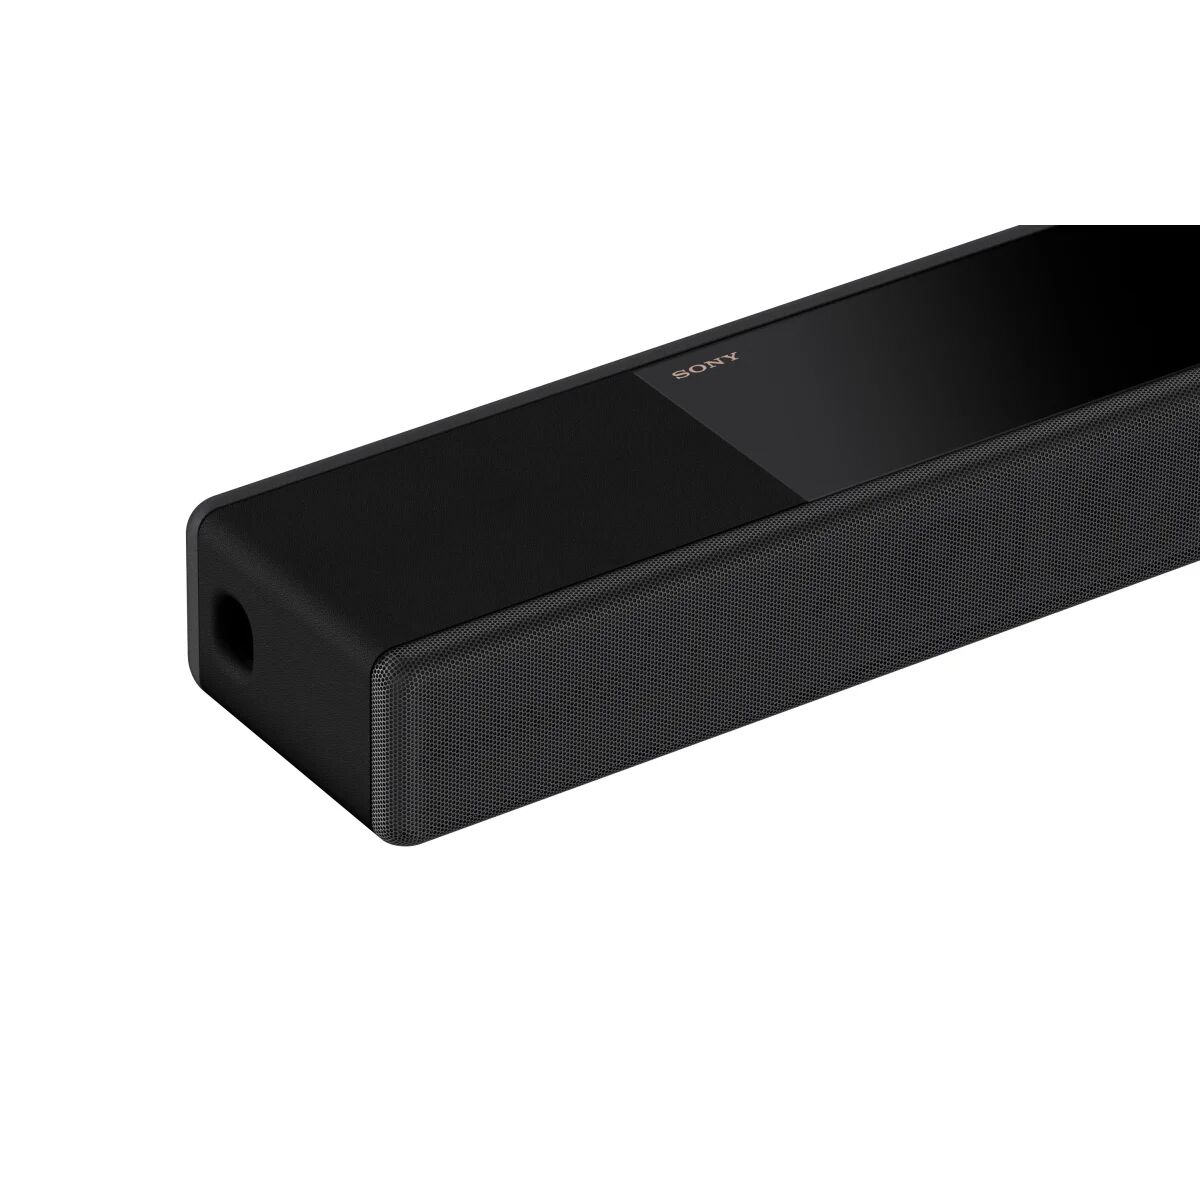 Sony Altoparlante soundbar  HT-A7000 Soundbar 7.1.2 Canali con tecnologia Vertical Surround Engine, Bluetooth, Nero [HTA7000]